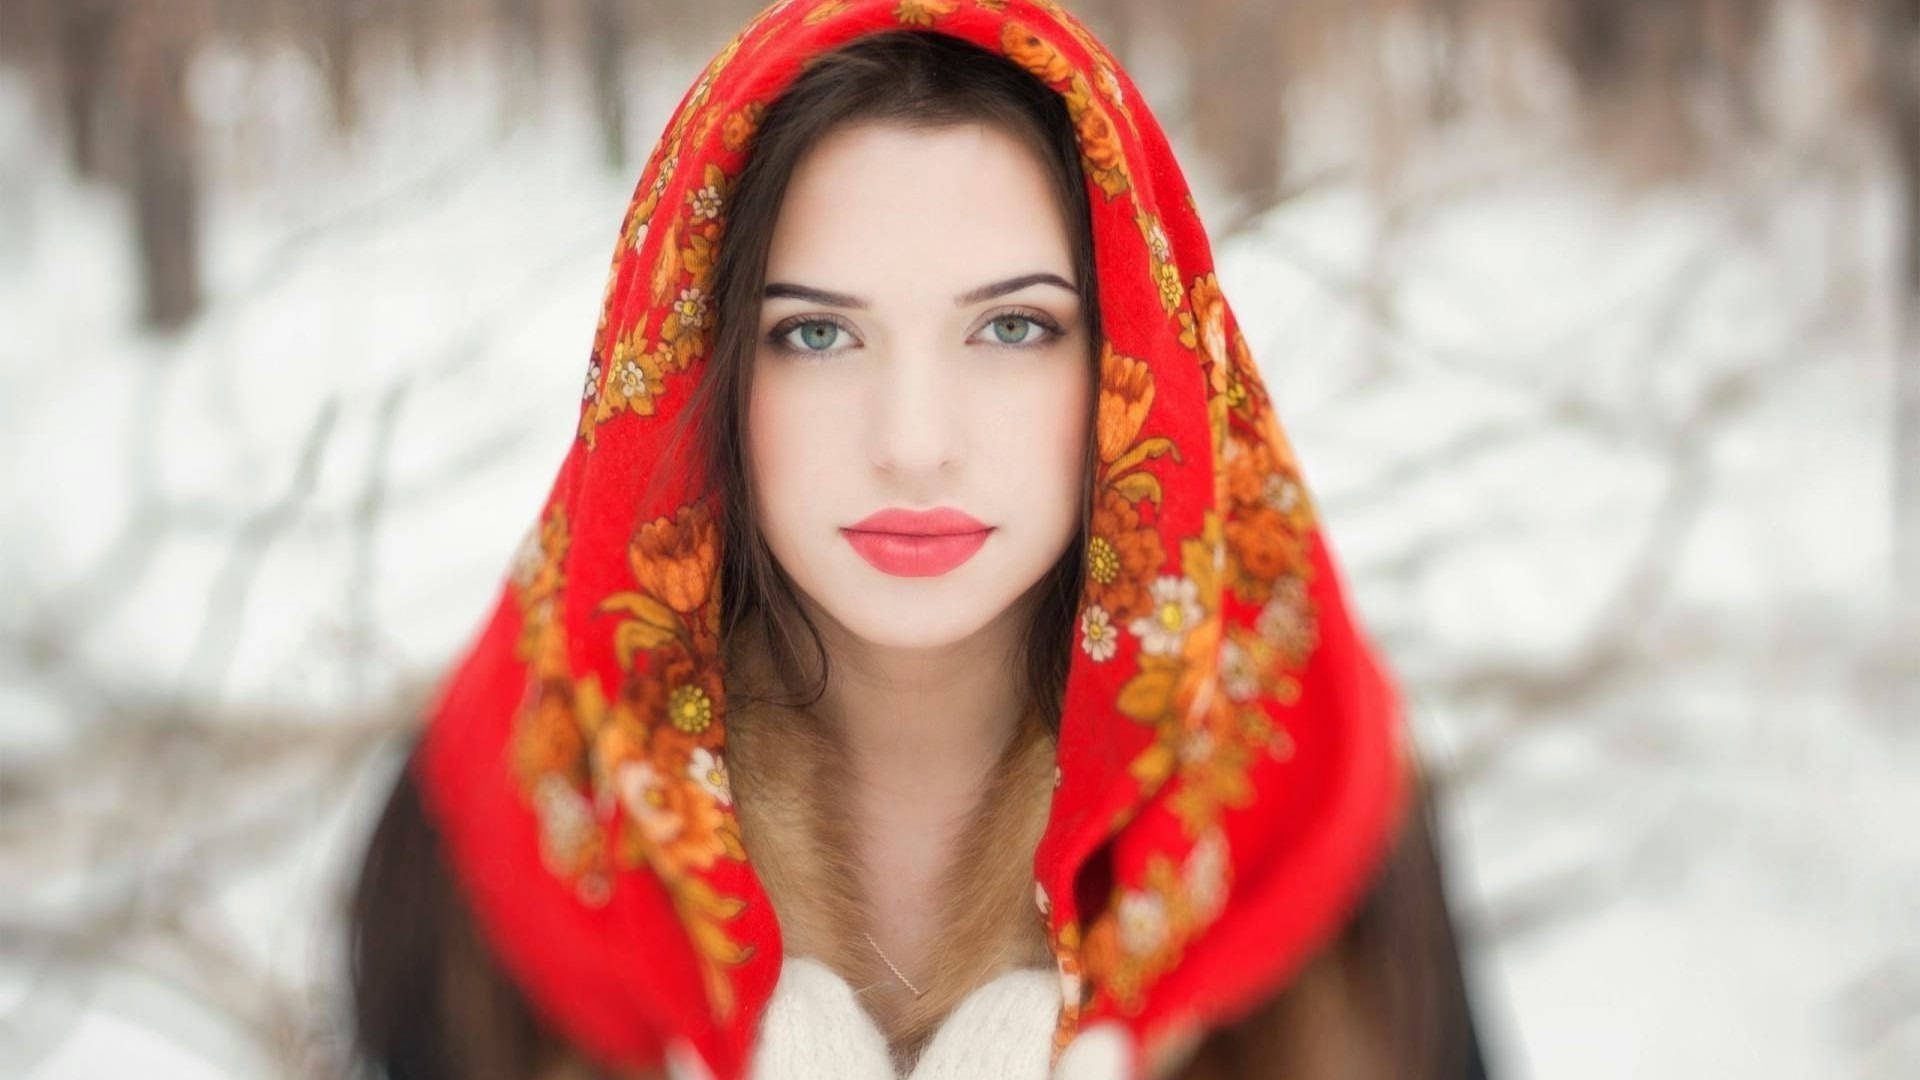 Russia Traditional Dress Wallpaper